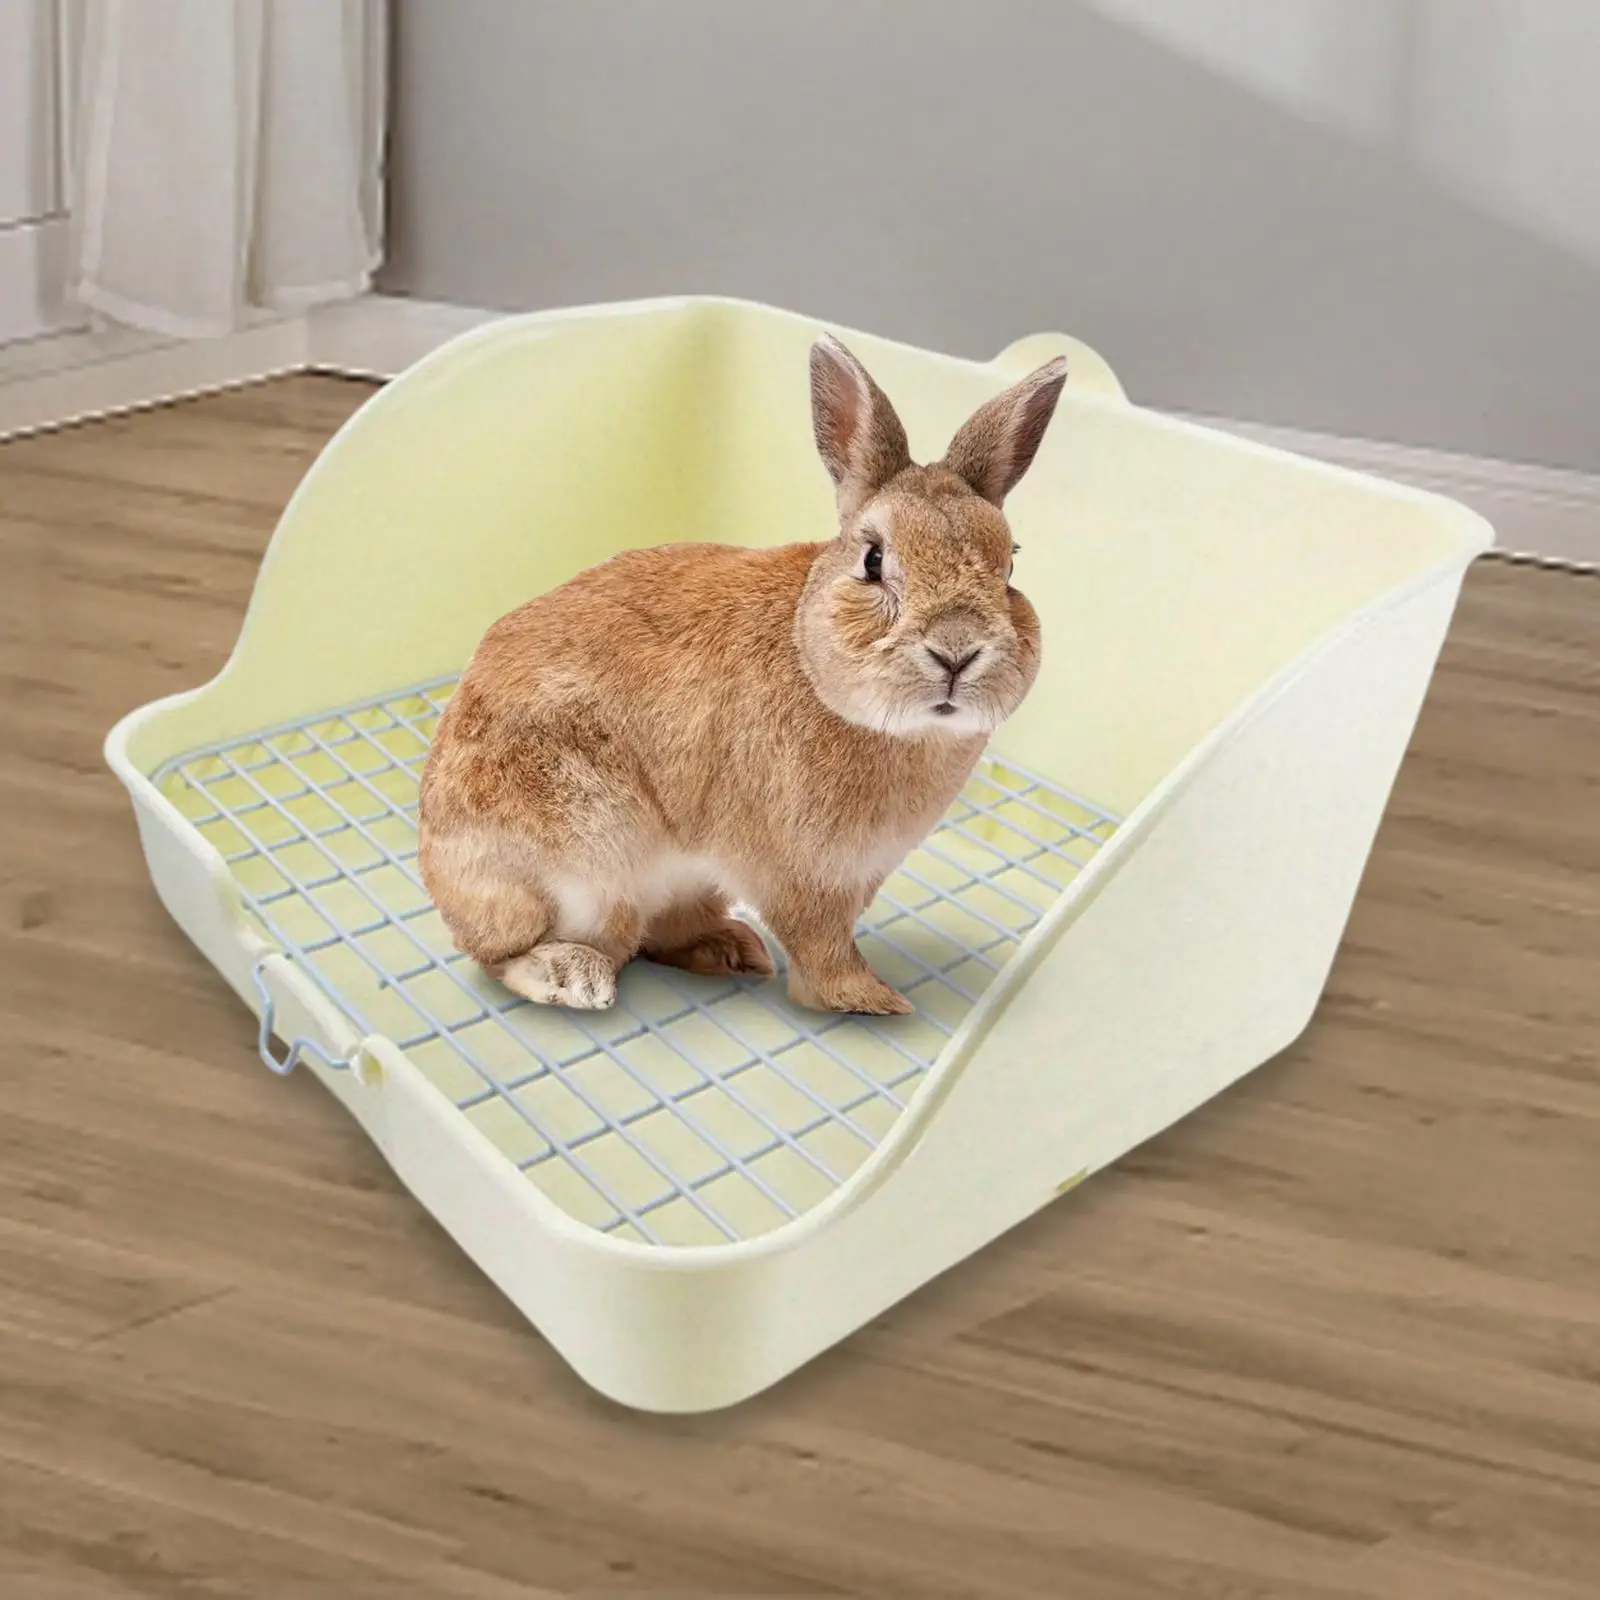 Rabbit Litter Box Plastic Bunny Hamster Pet Toilet Bedding Cage Potty Box